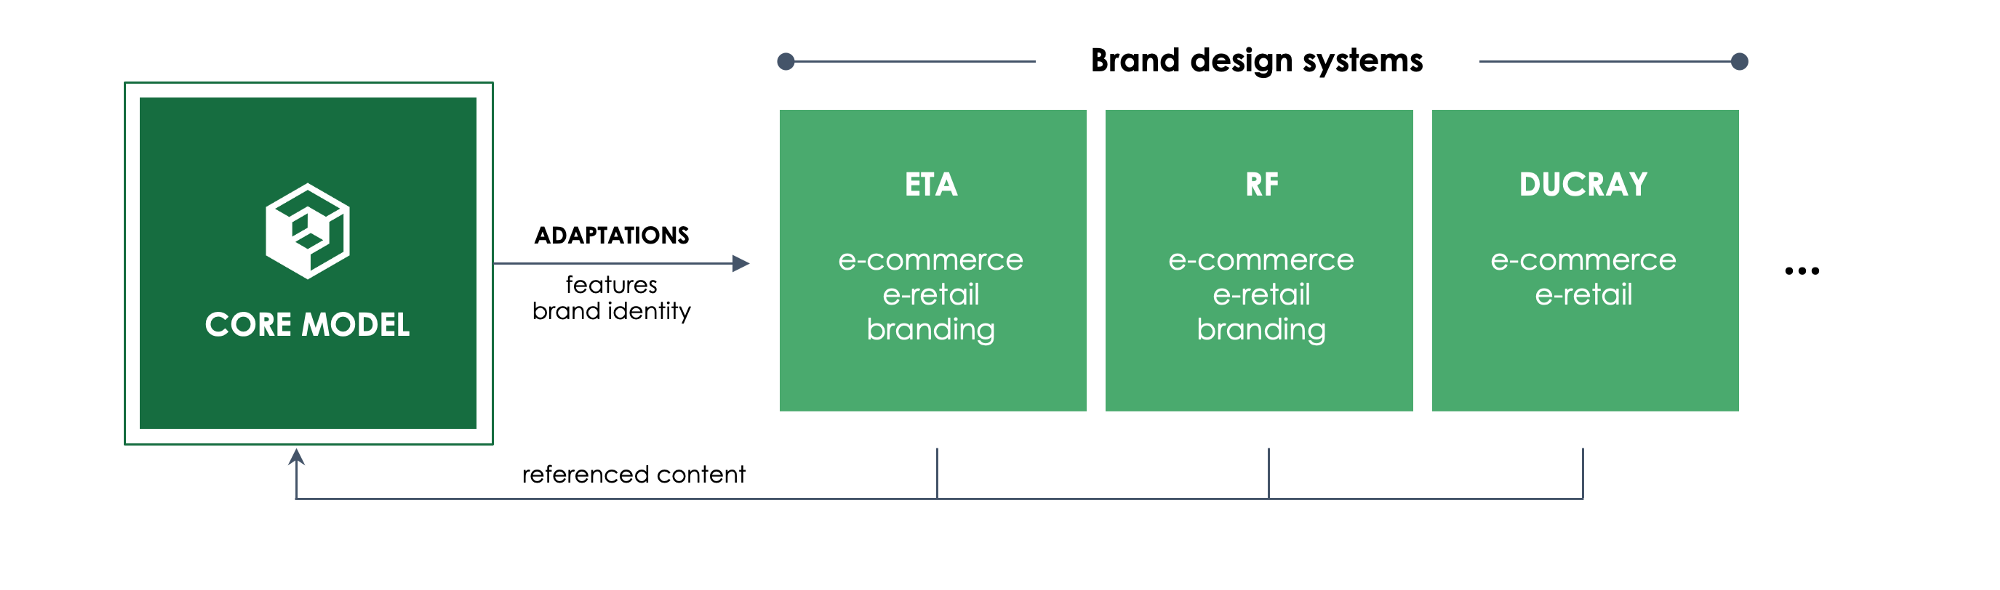 Brand design systems